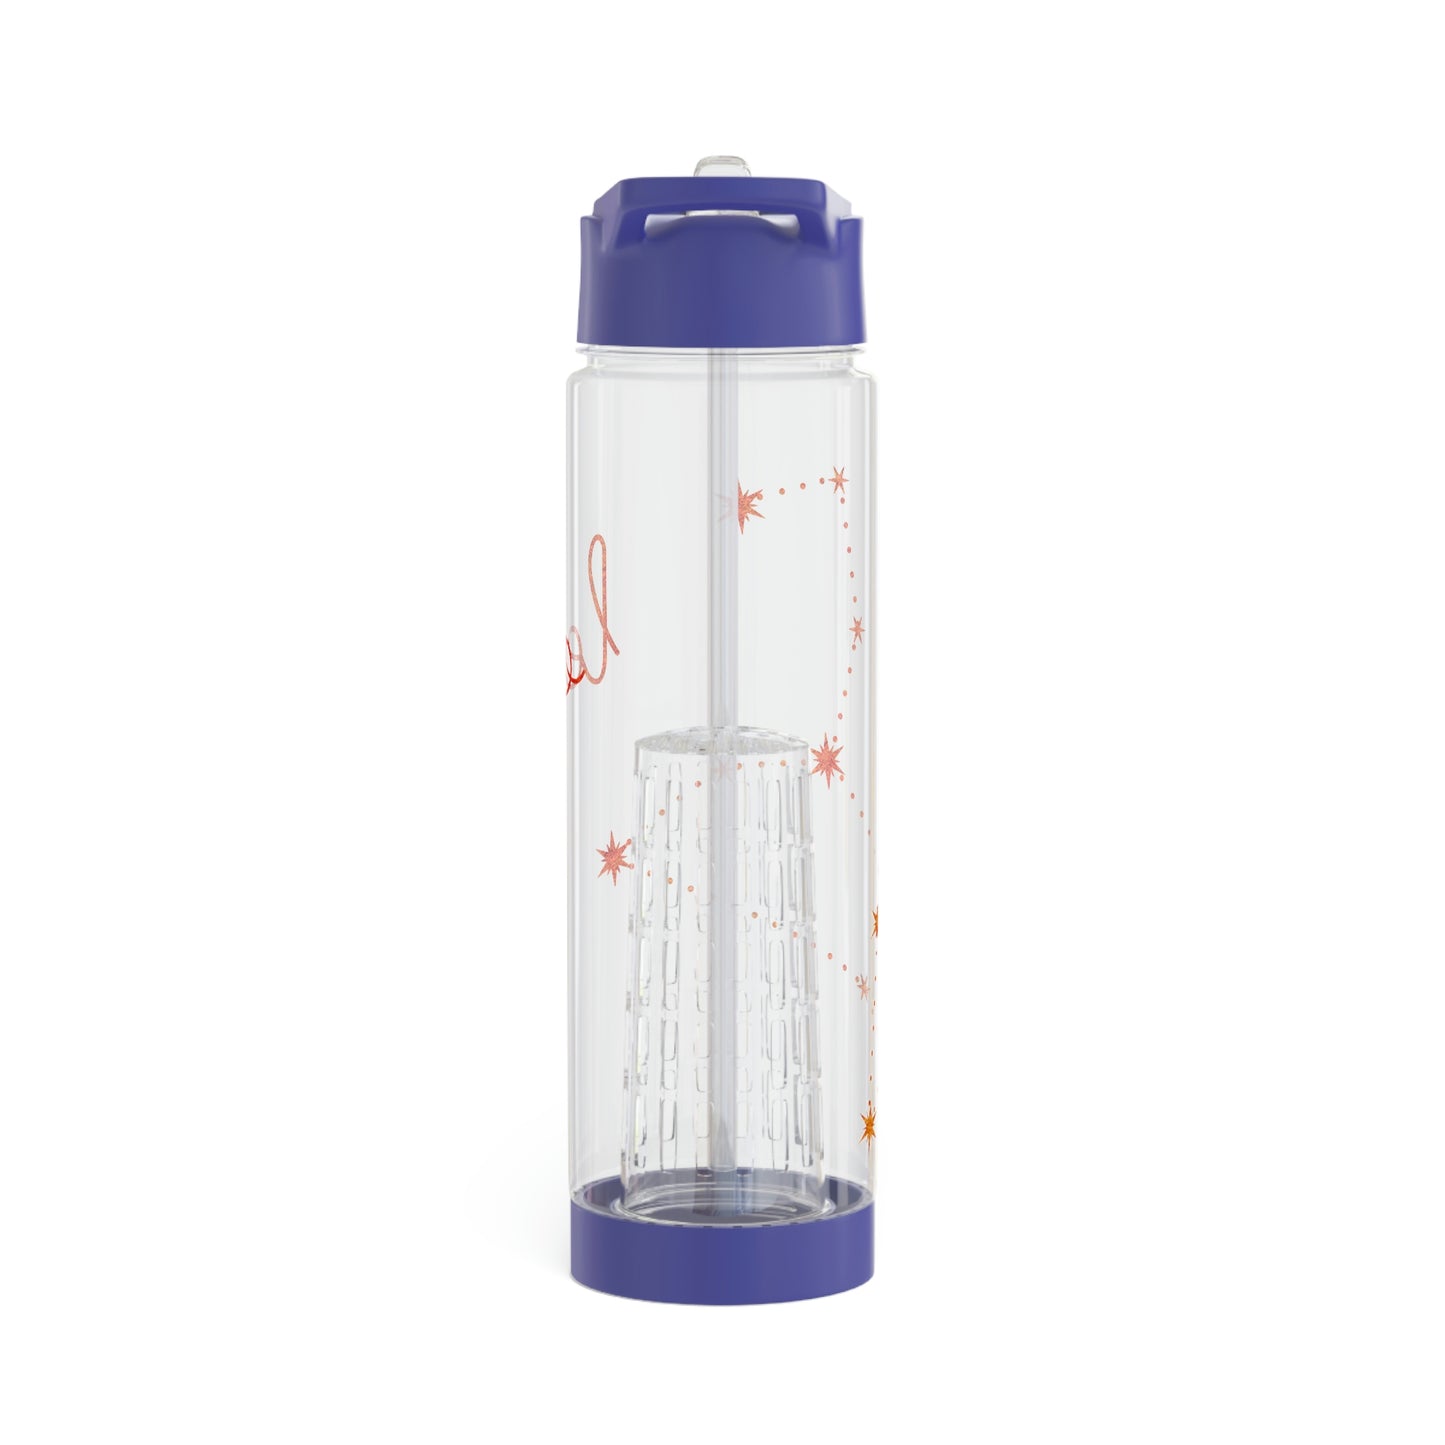 Leo Constellation Infuser Water Bottle